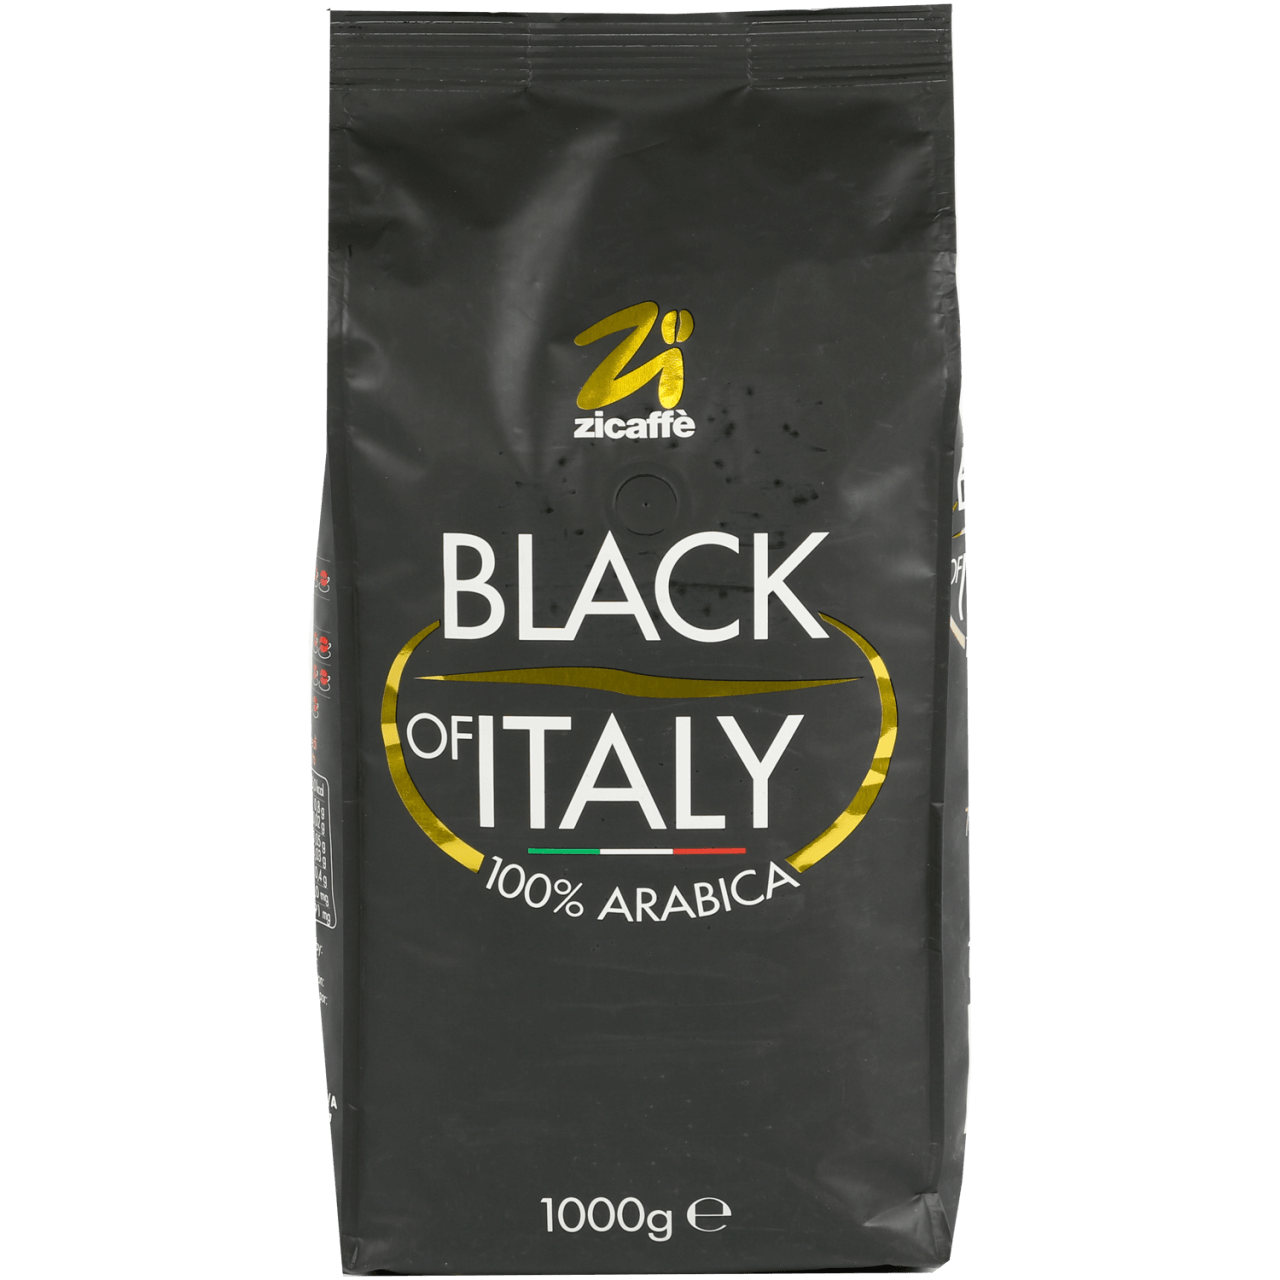 Zicaffè Black of Italy 100% Arabica